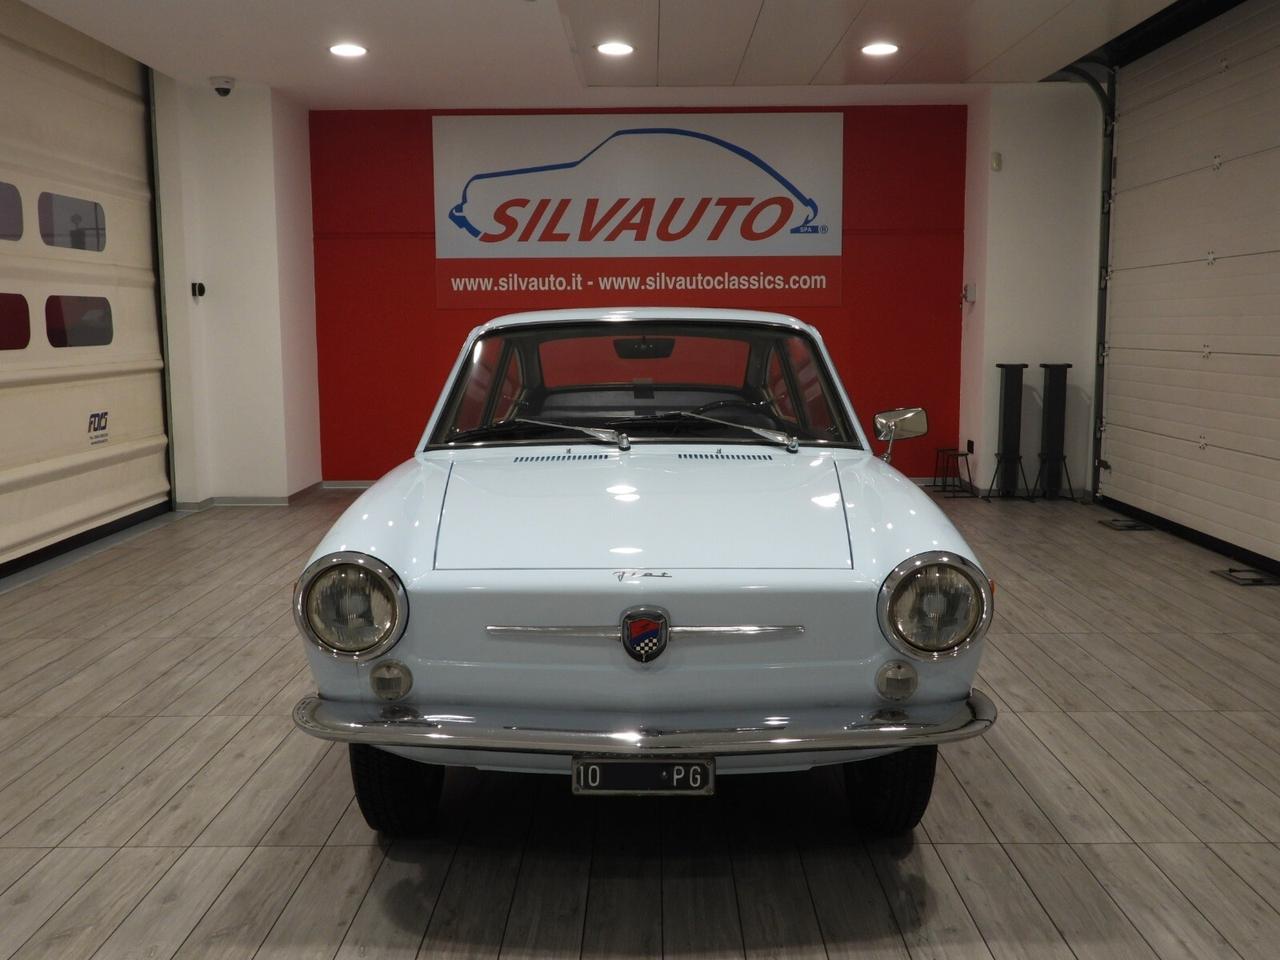 FIAT 850 S COUPE’ GIANNINI 2 2 (1966)